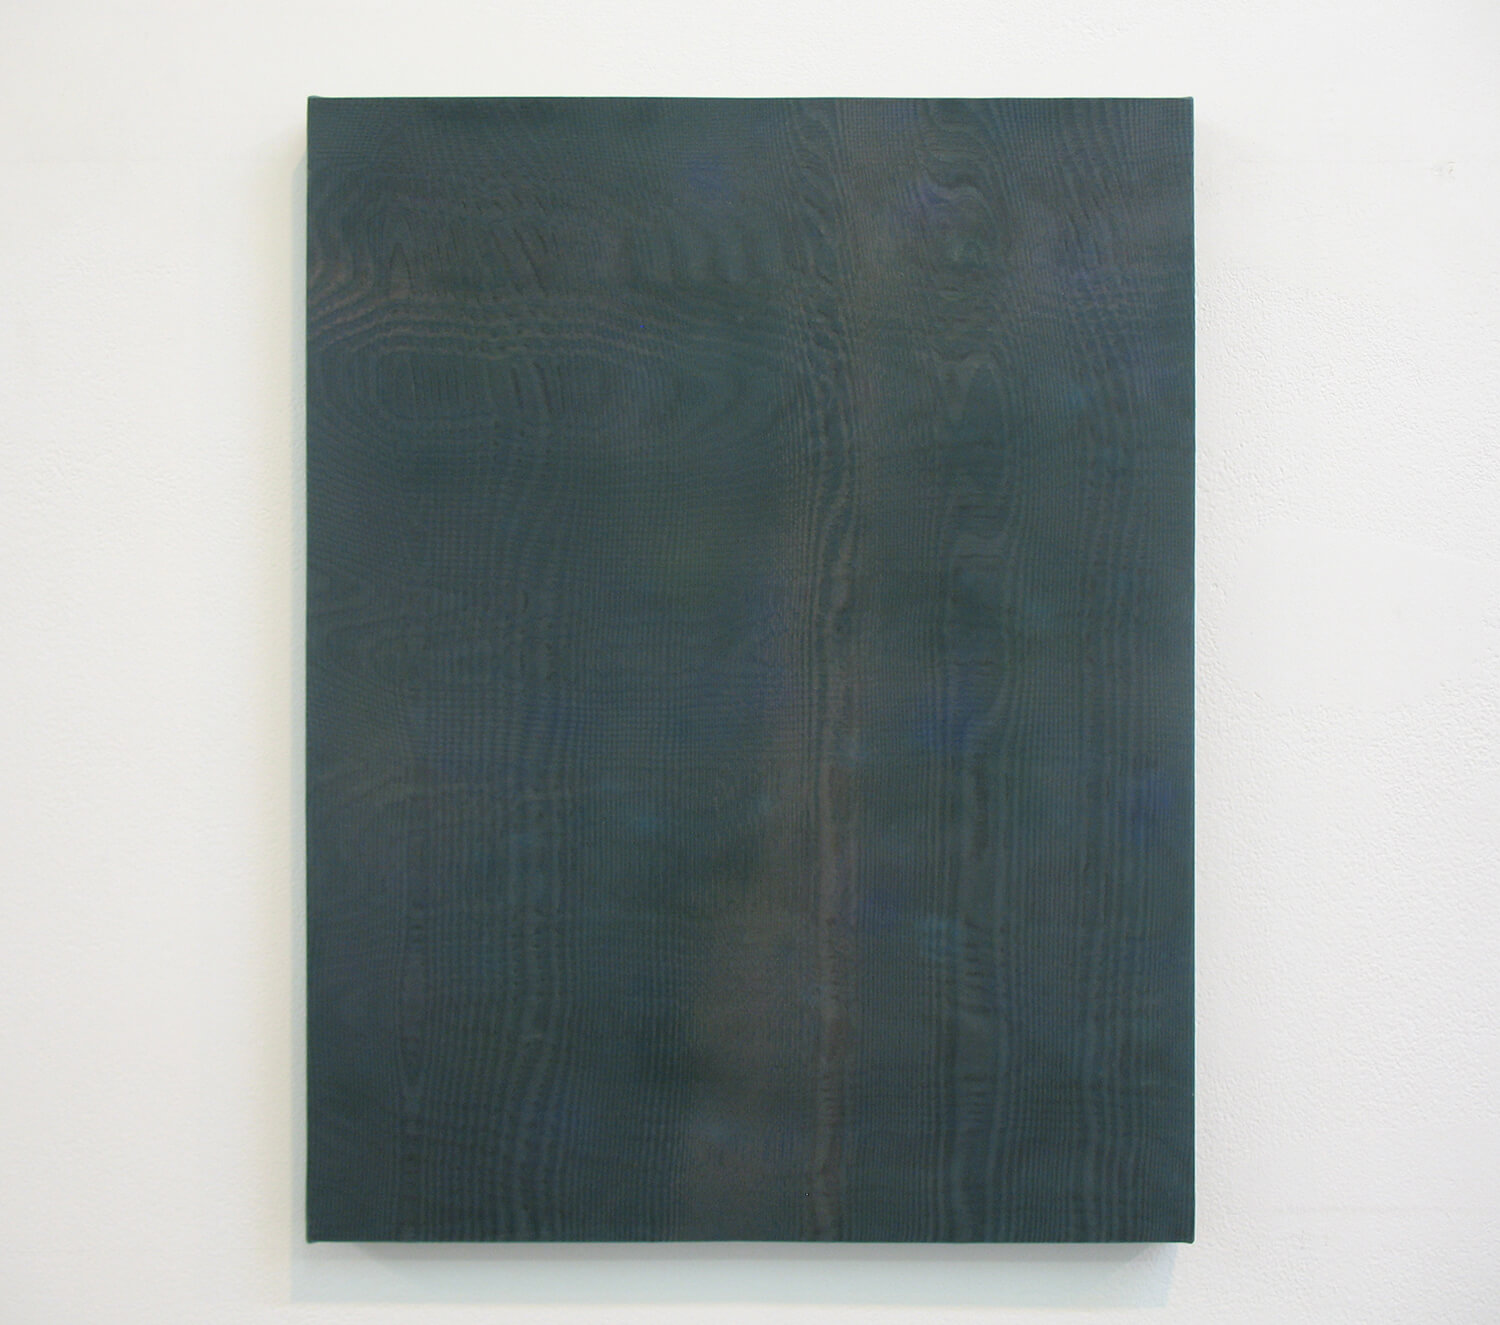 drops #5<br>
Acrylic, glass organdy, cotton, panel 41 x 33 cm 2013